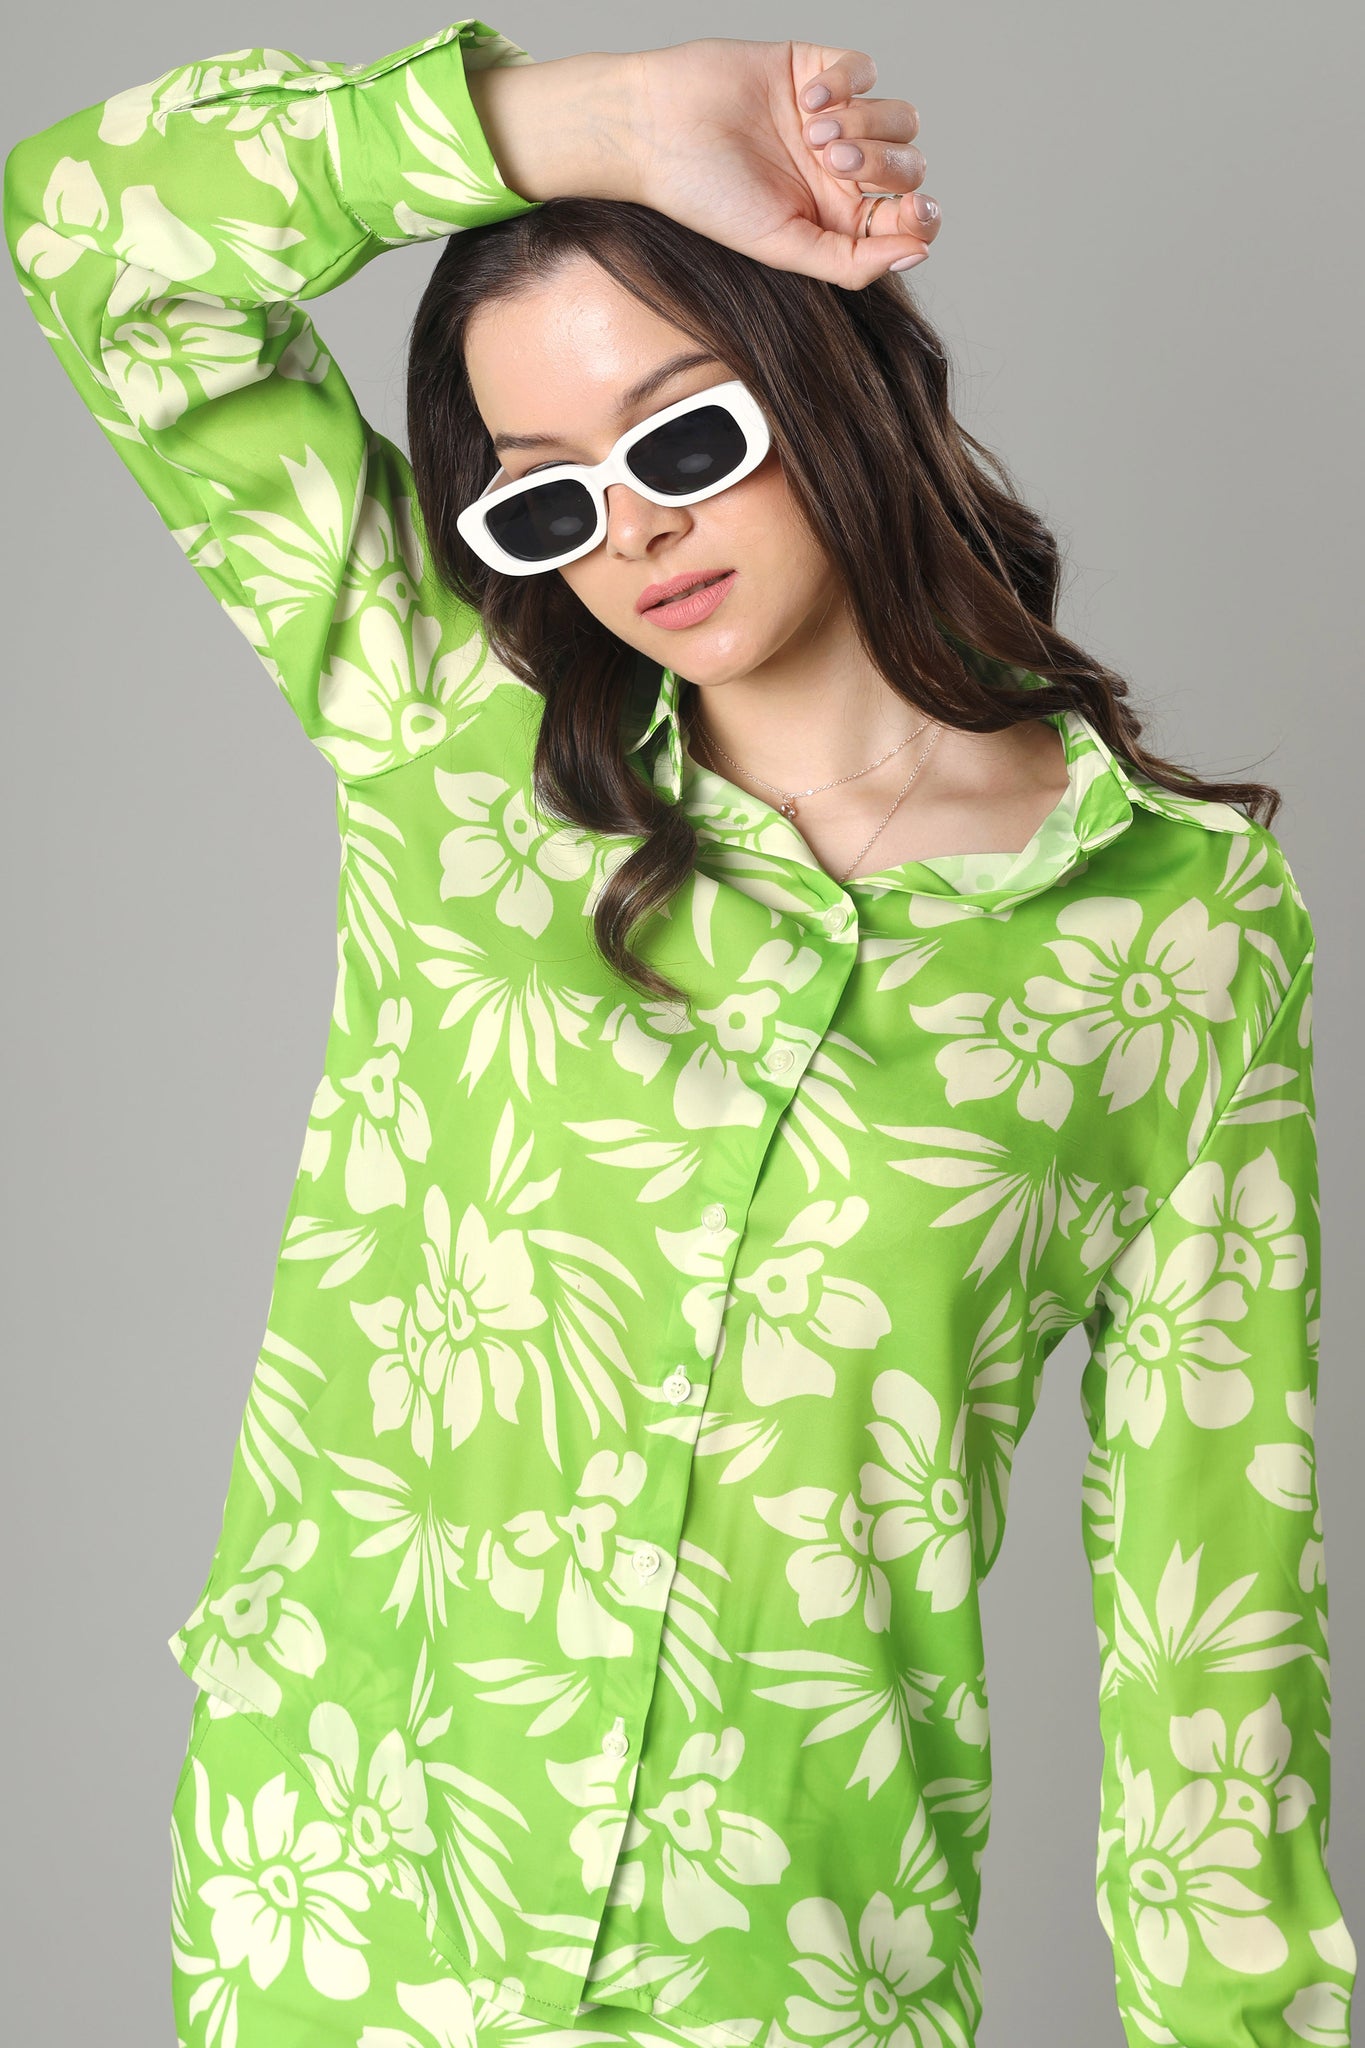 Smart Neon Floral Shirt For Women